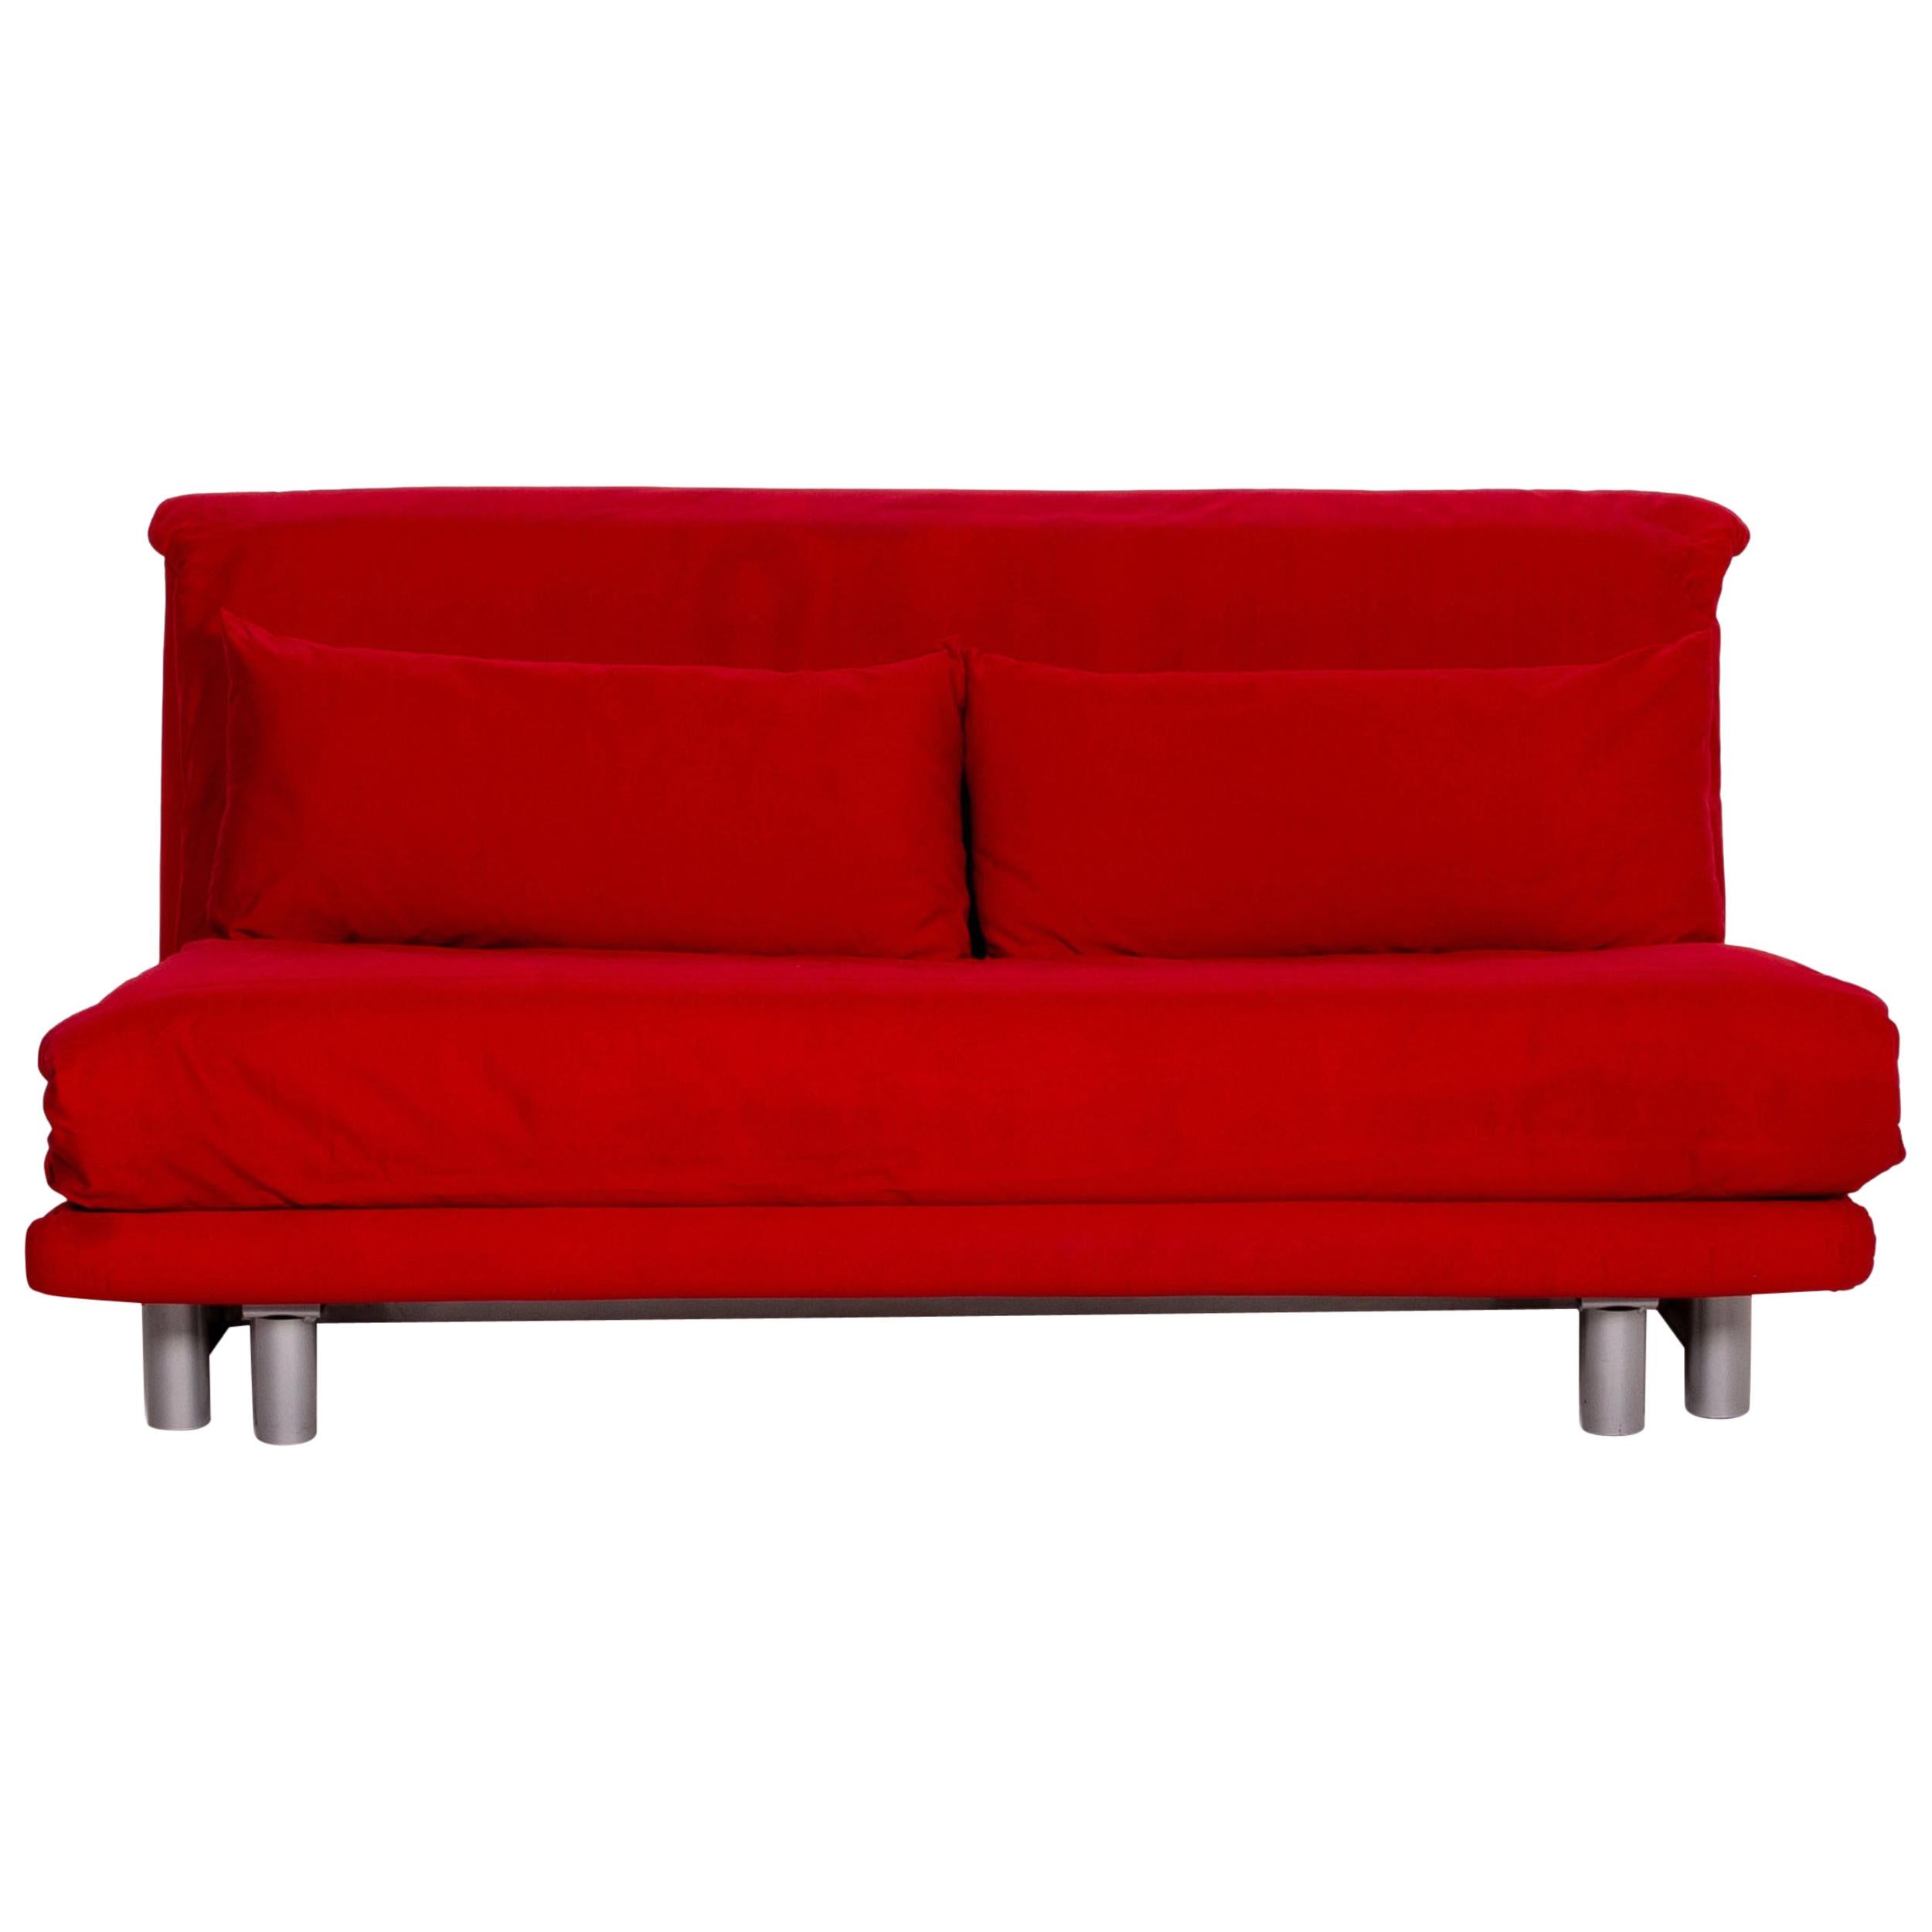 Ligne Roset Multy Fabric Sofa Bed Red Sofa Three-Seater Function Sleeping